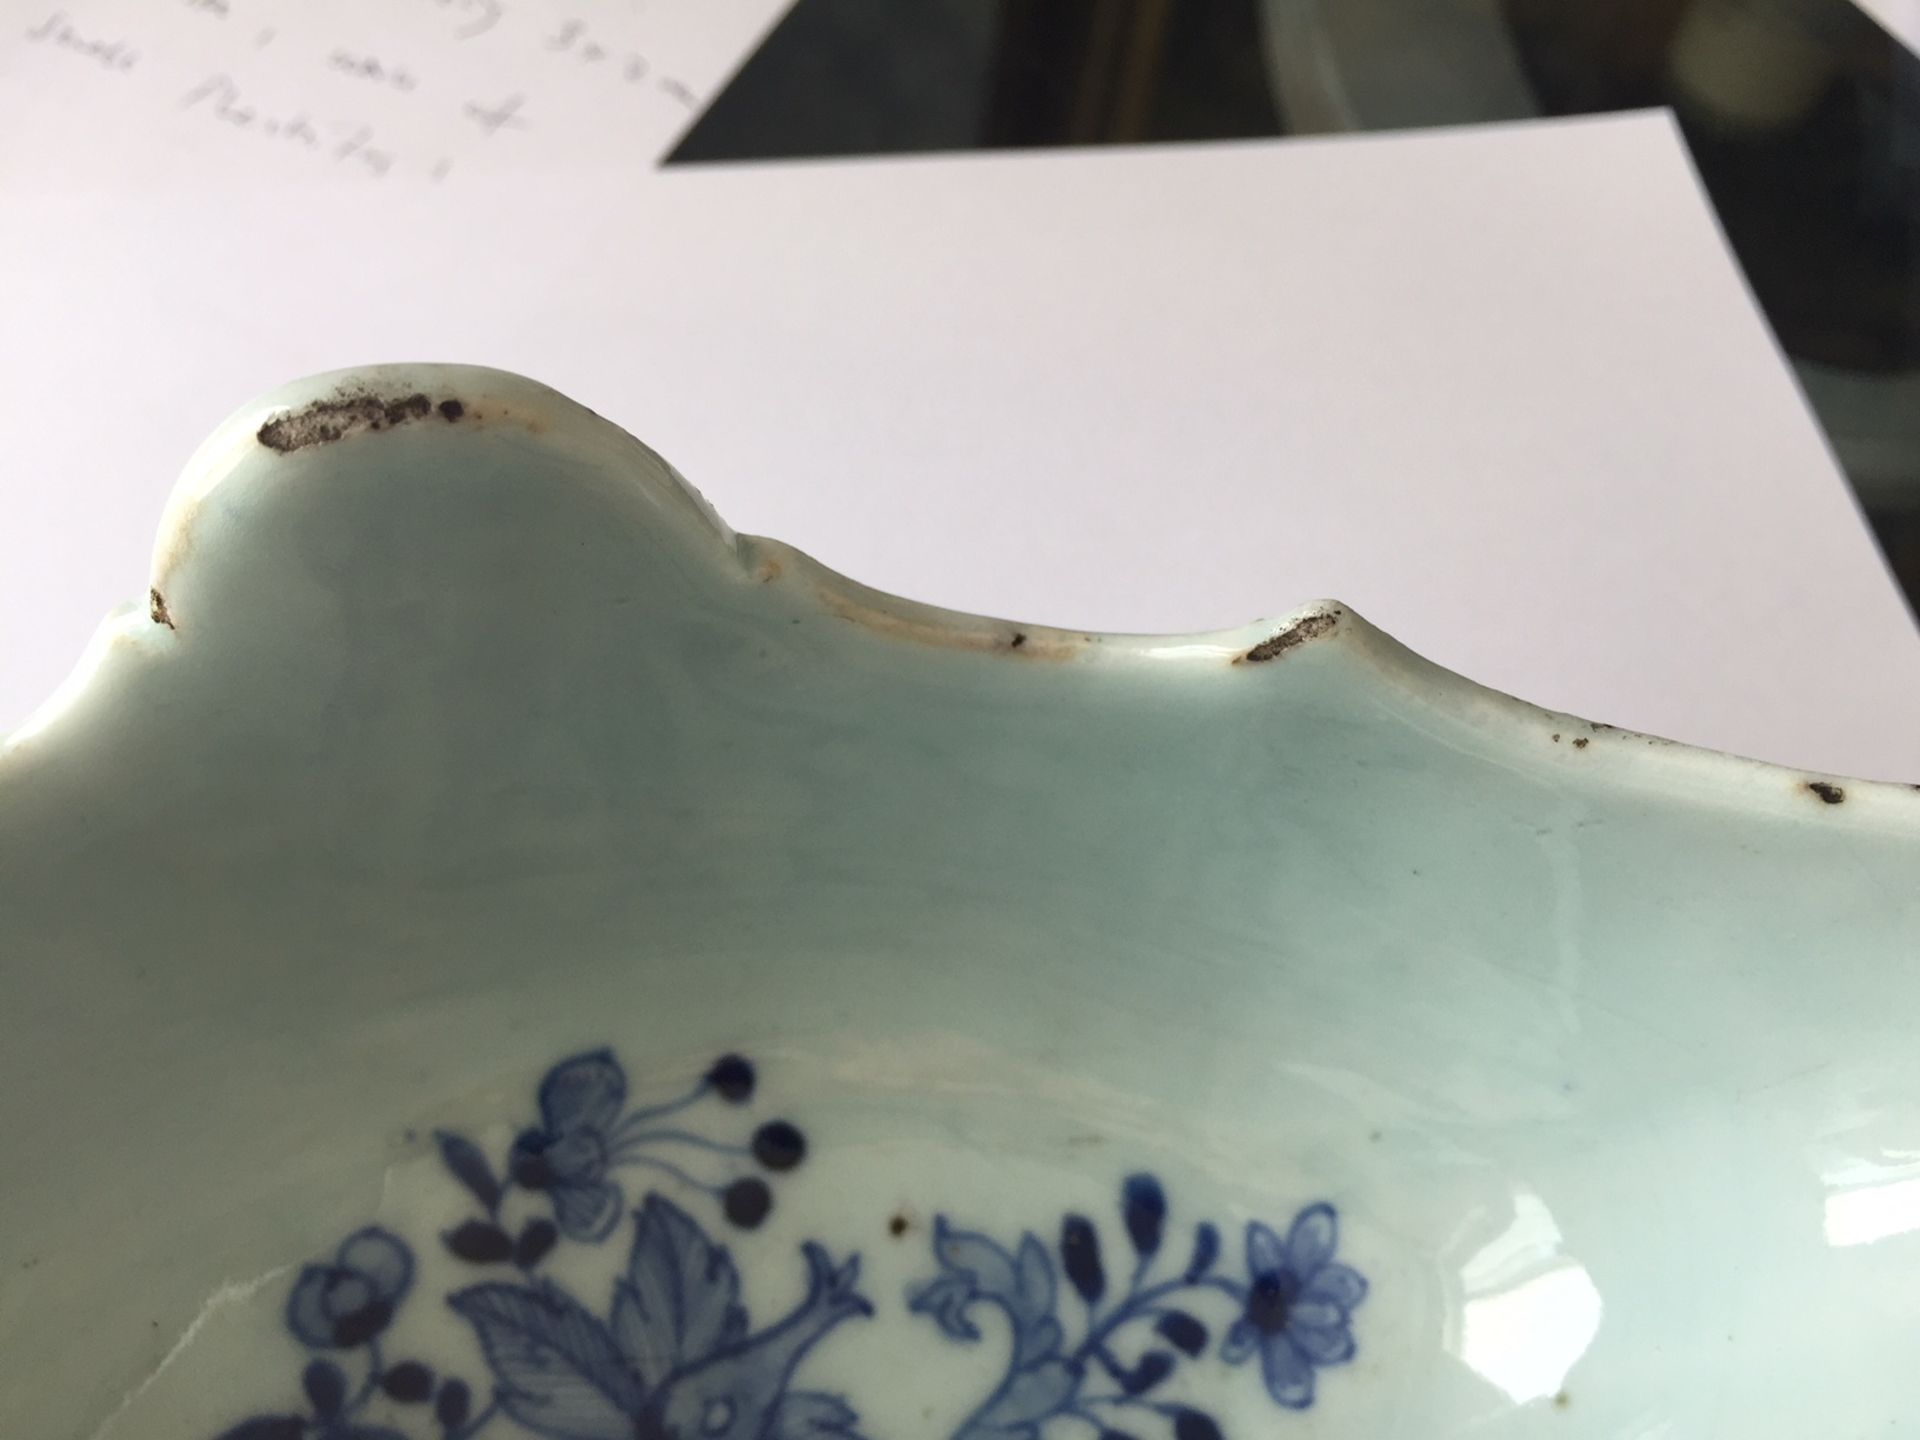 Rare pair of antique Chinese porcelain sauceboats, Circa 1750 (Qianlong period) - Image 17 of 20